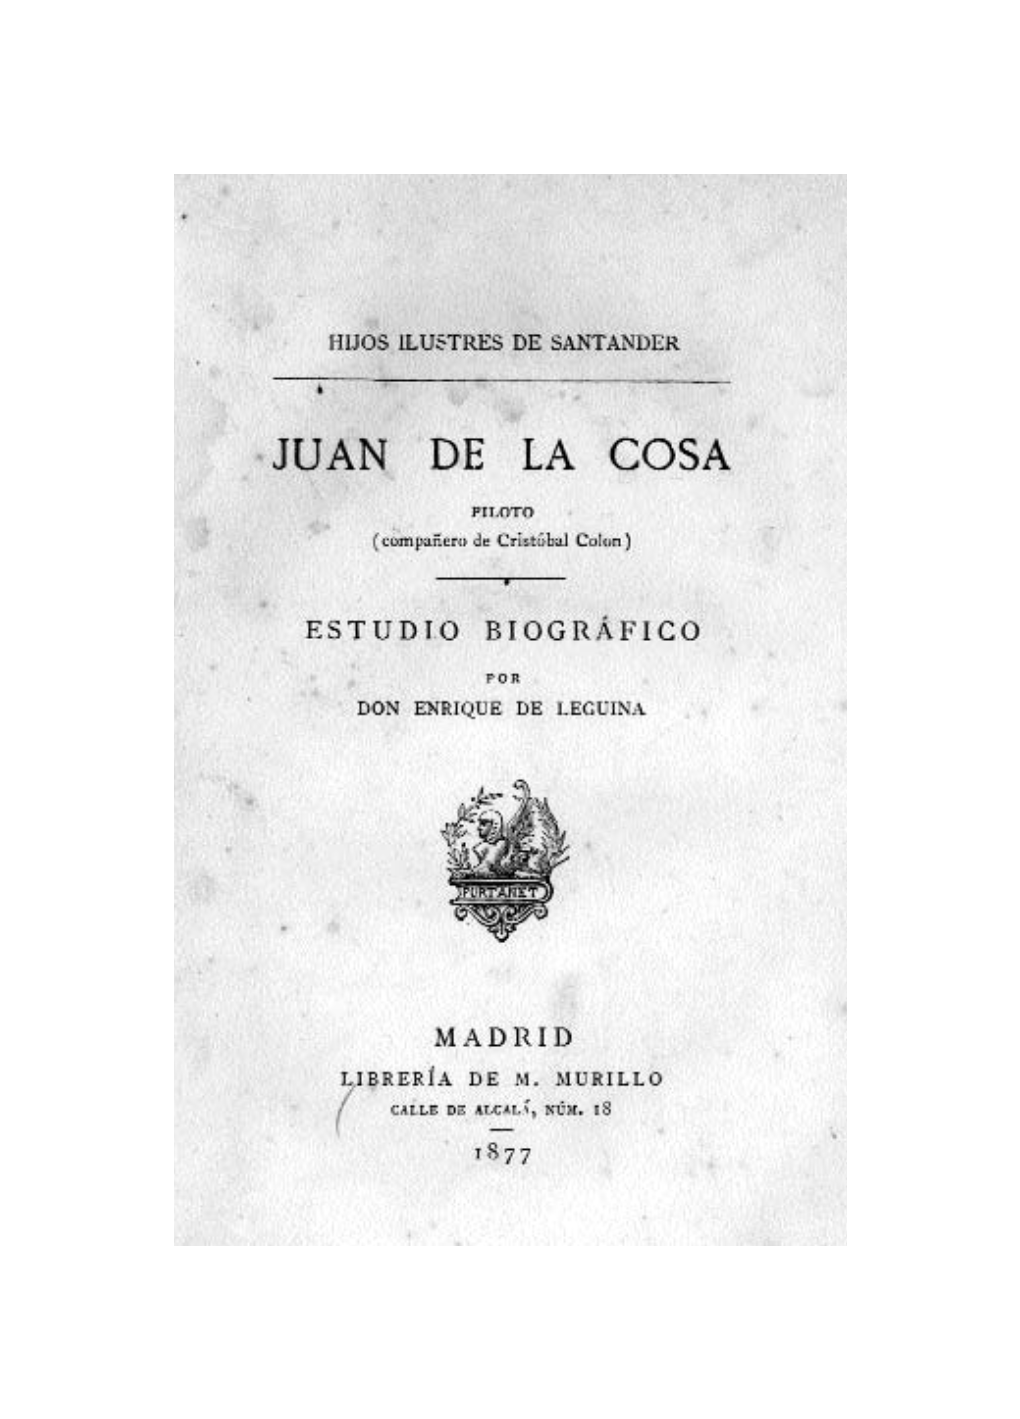 Juan De La Cosa, Piloto (Compañero De Cristobal Colón)